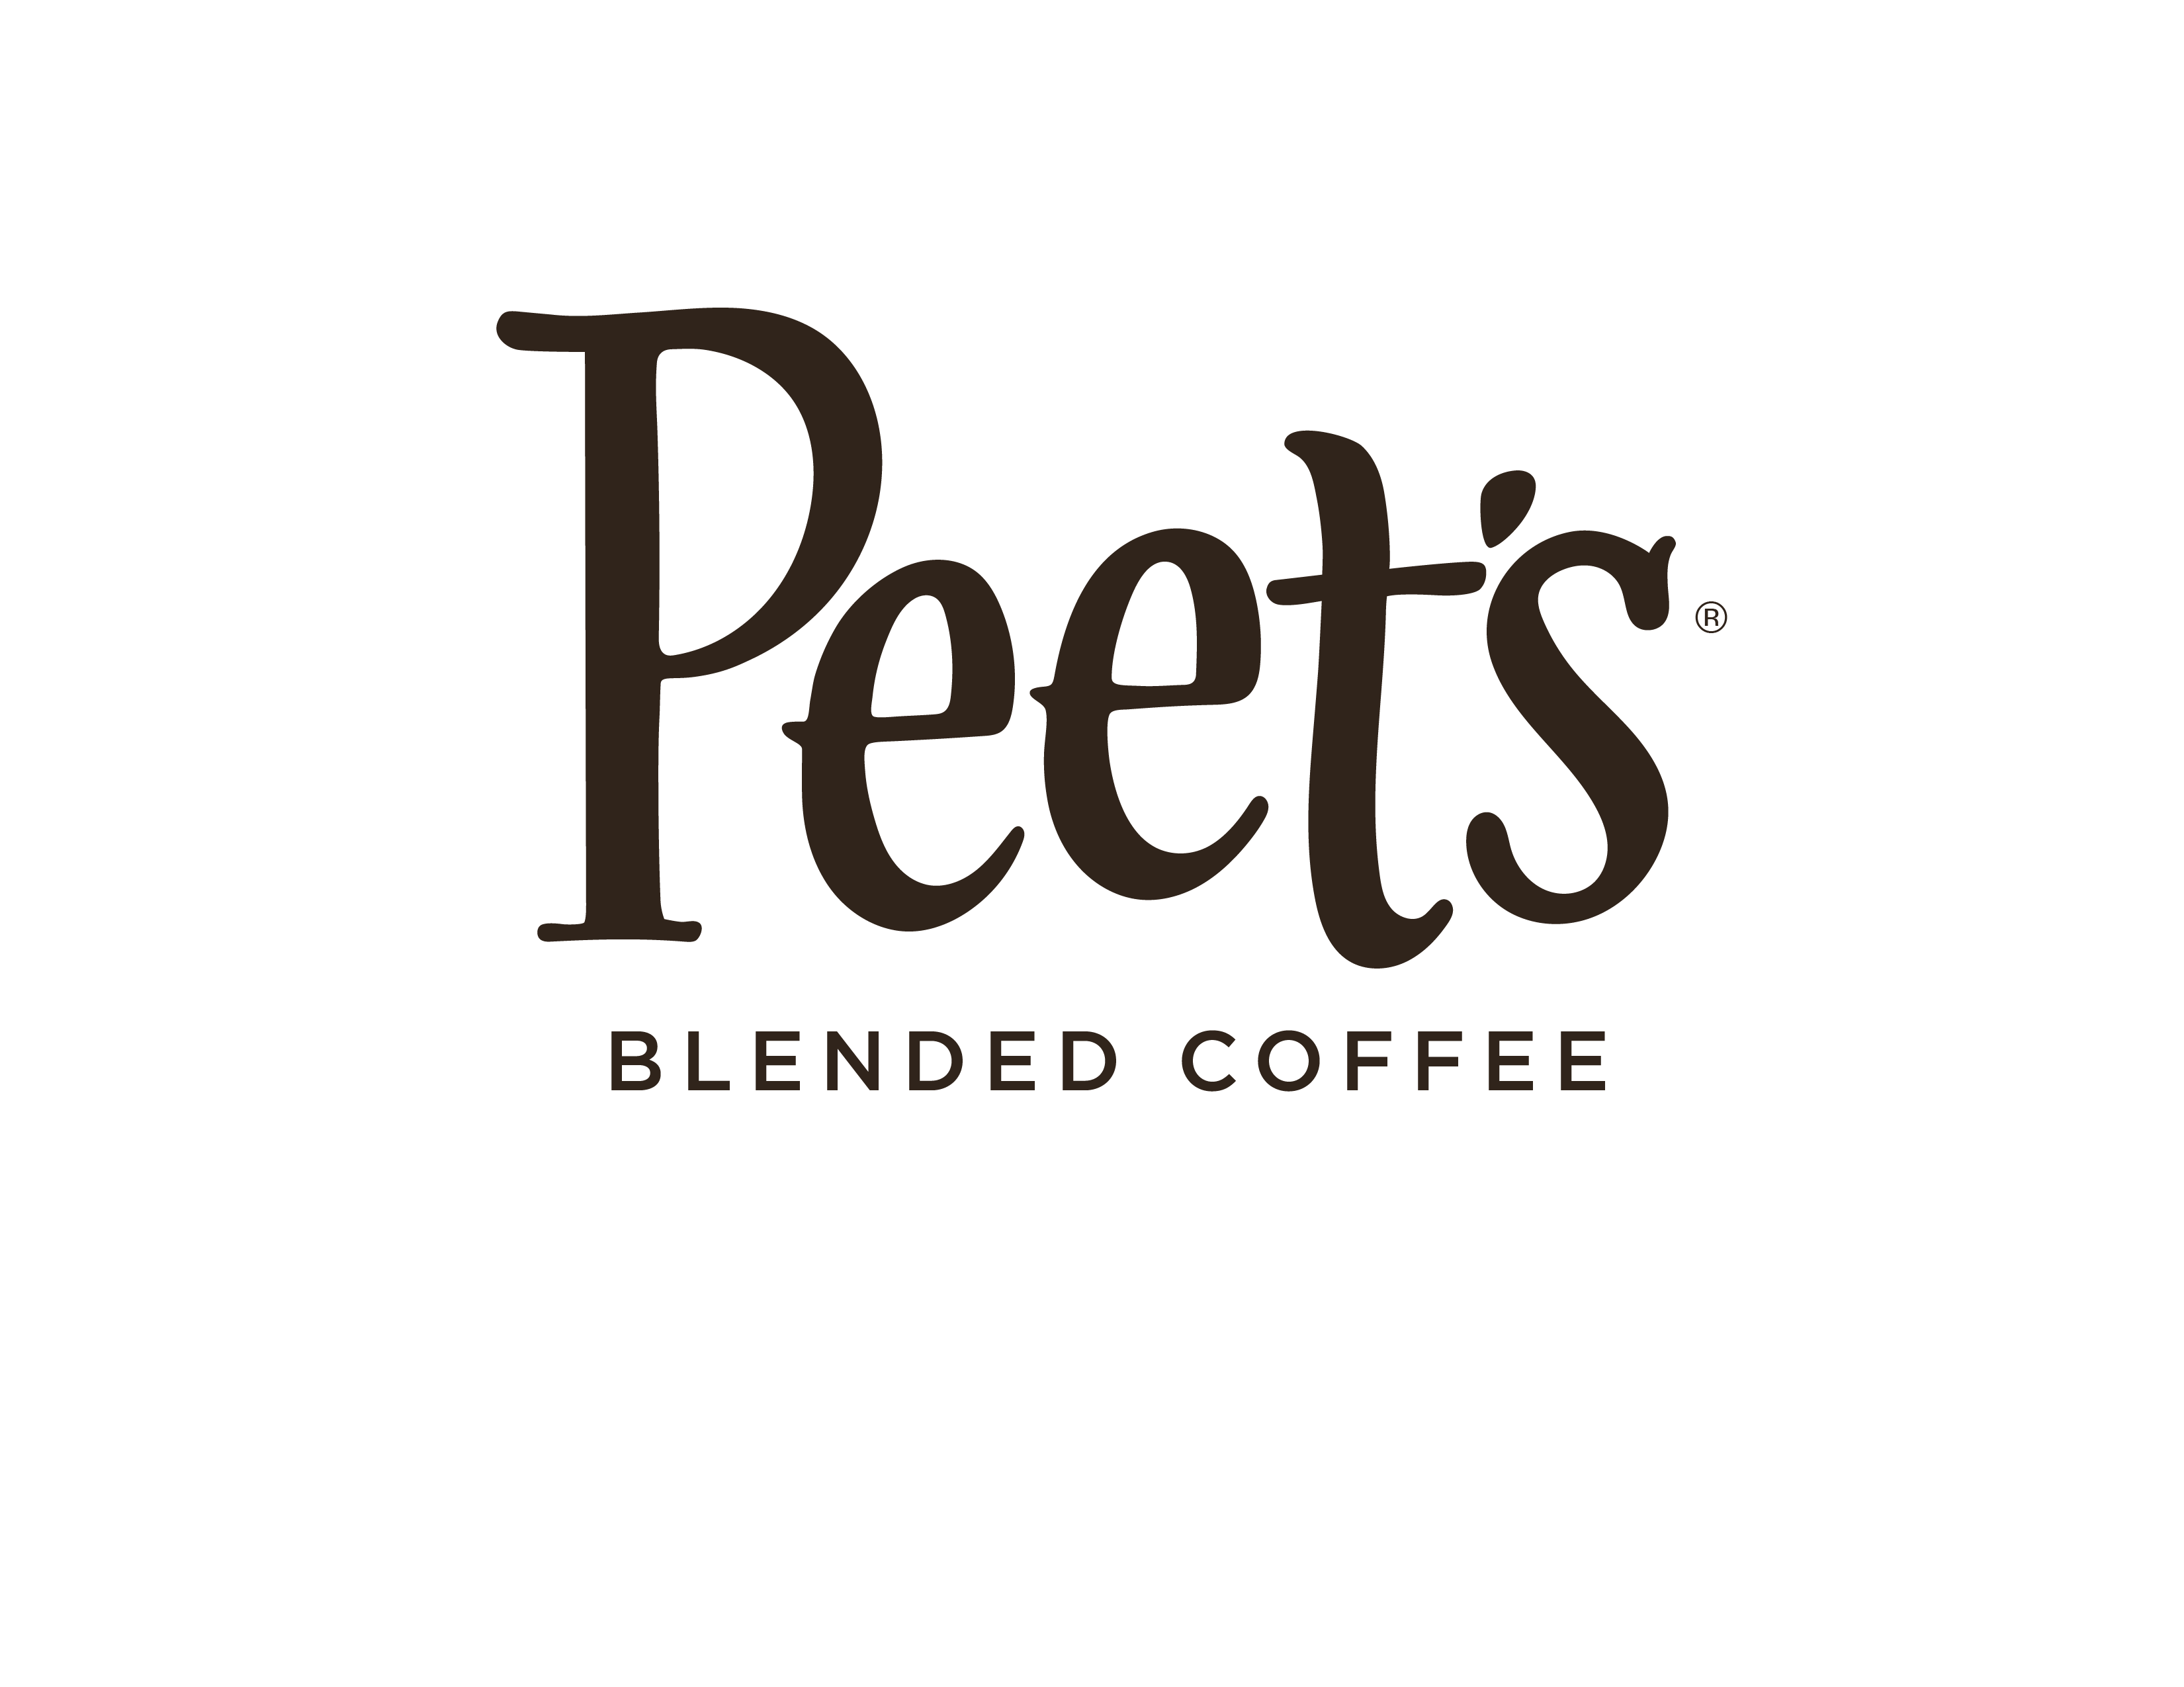 Brand: Peet's